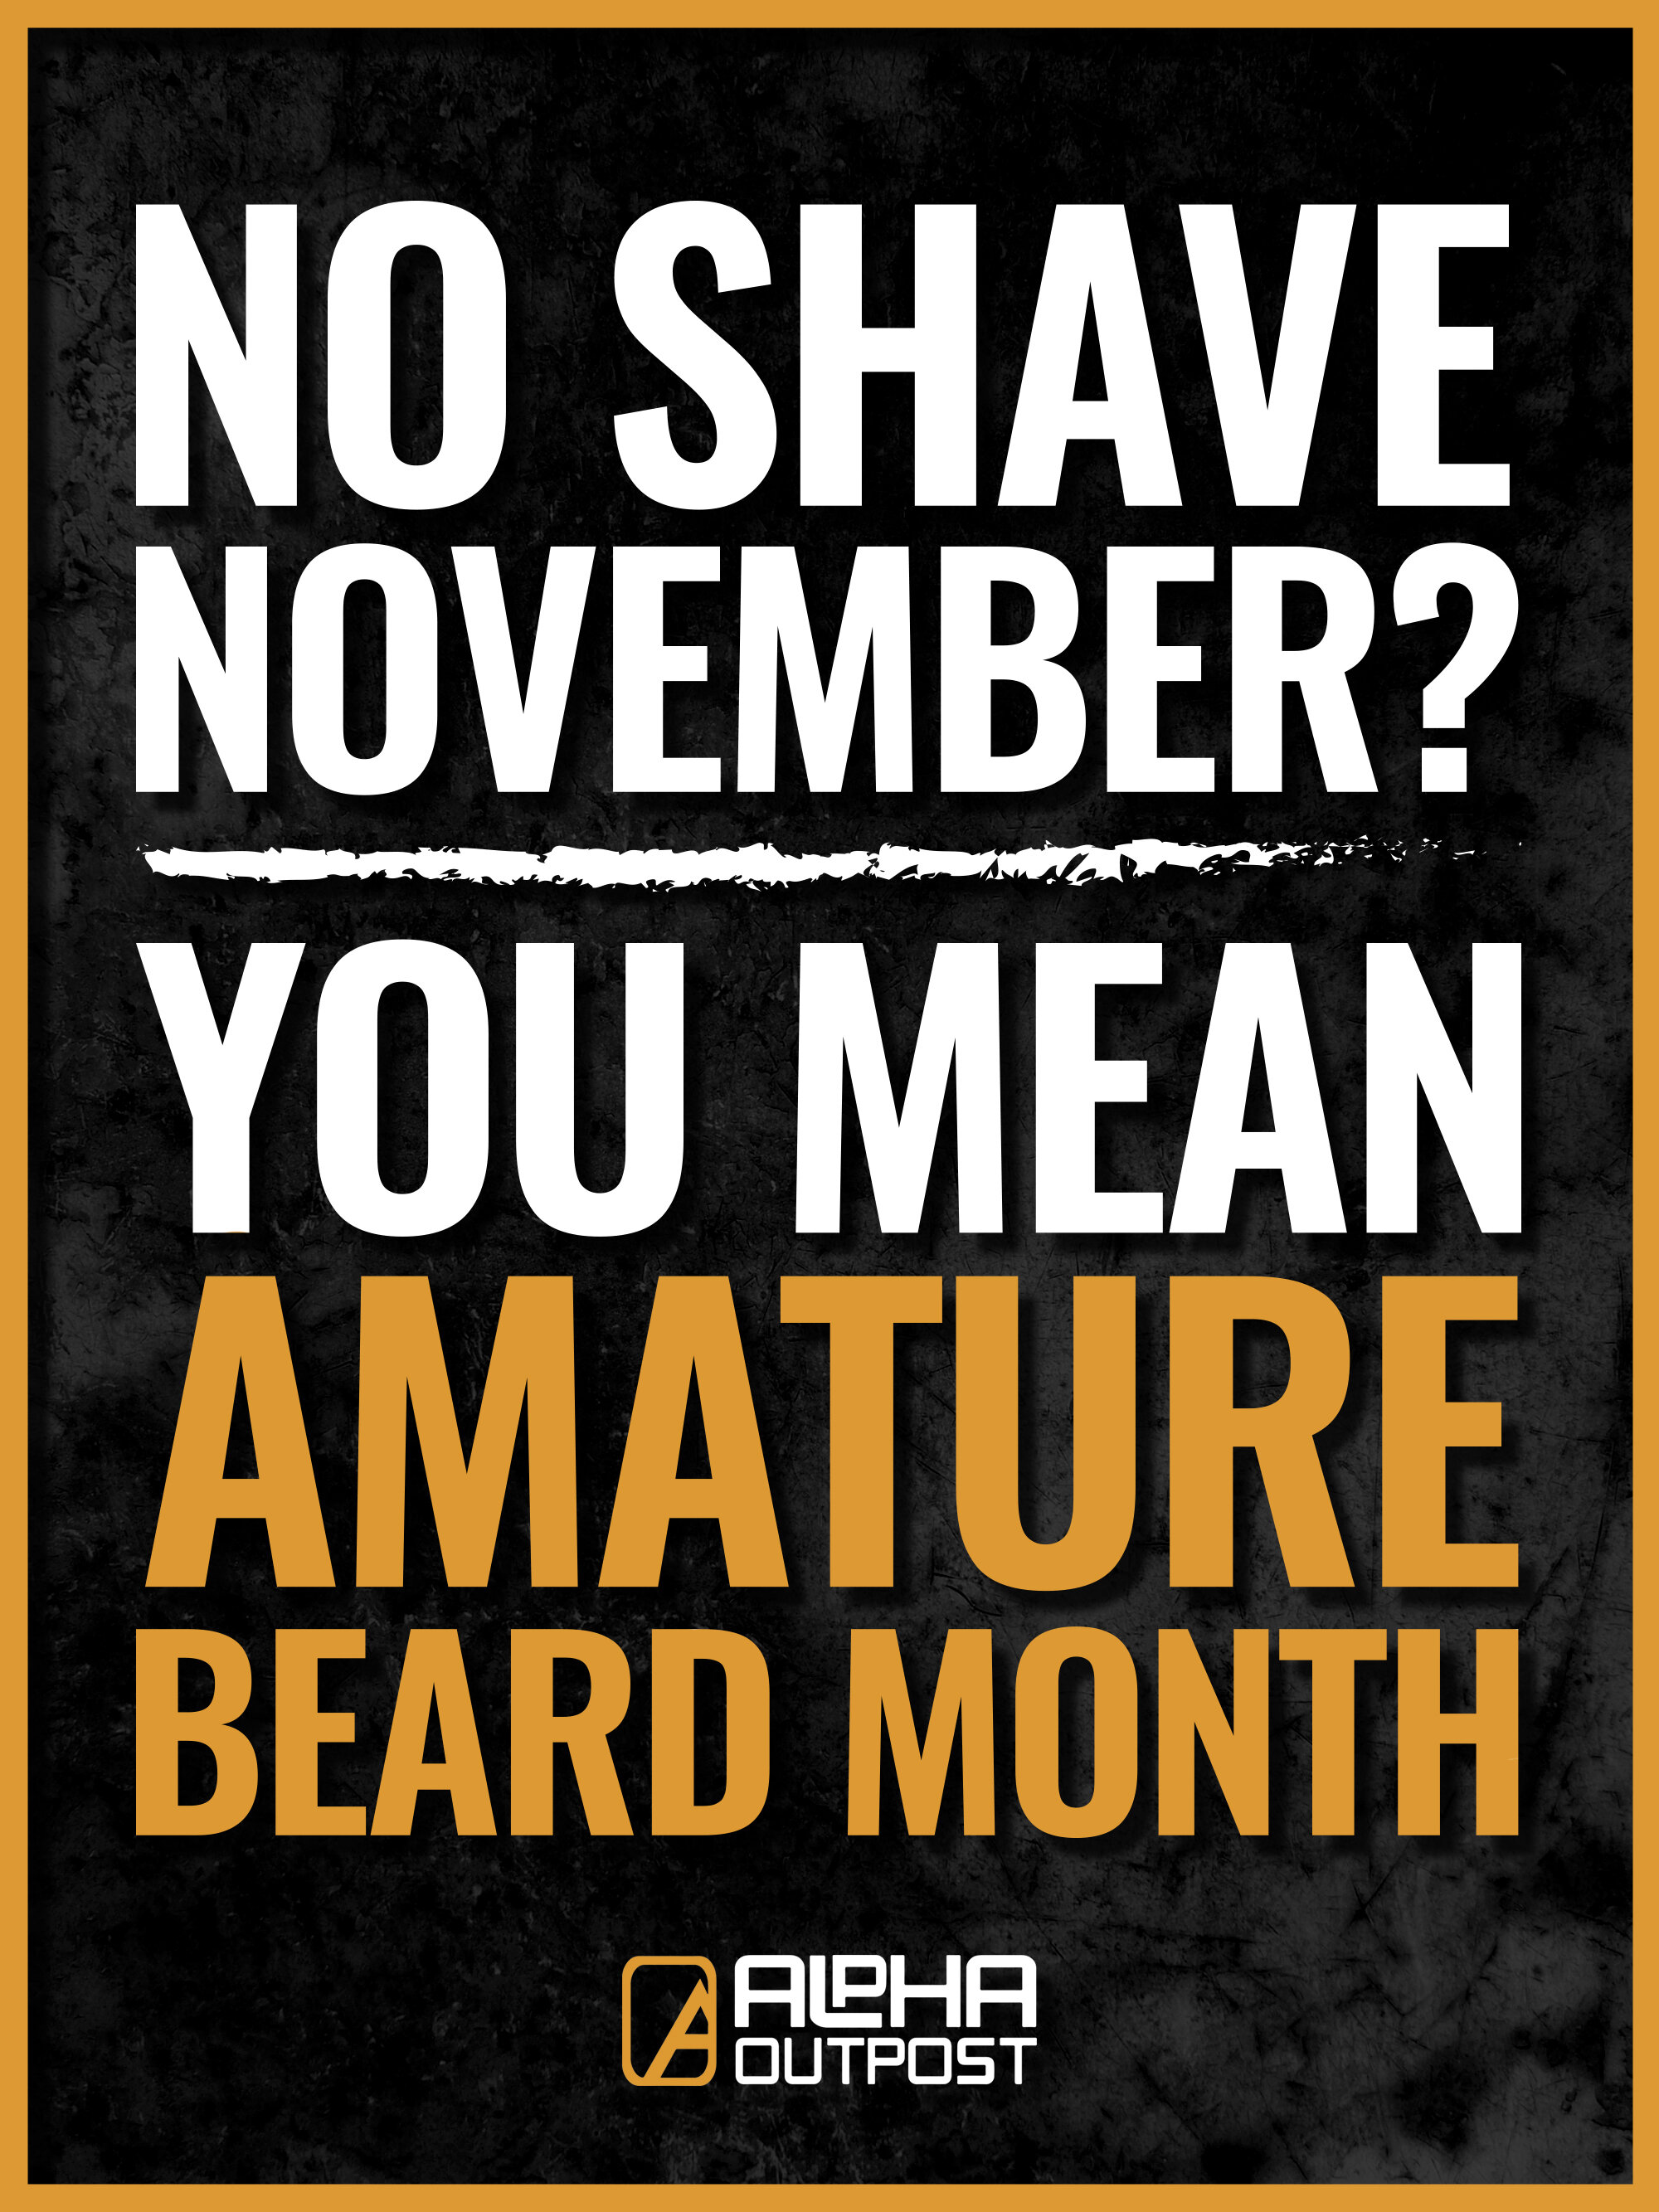 No shave november.jpg